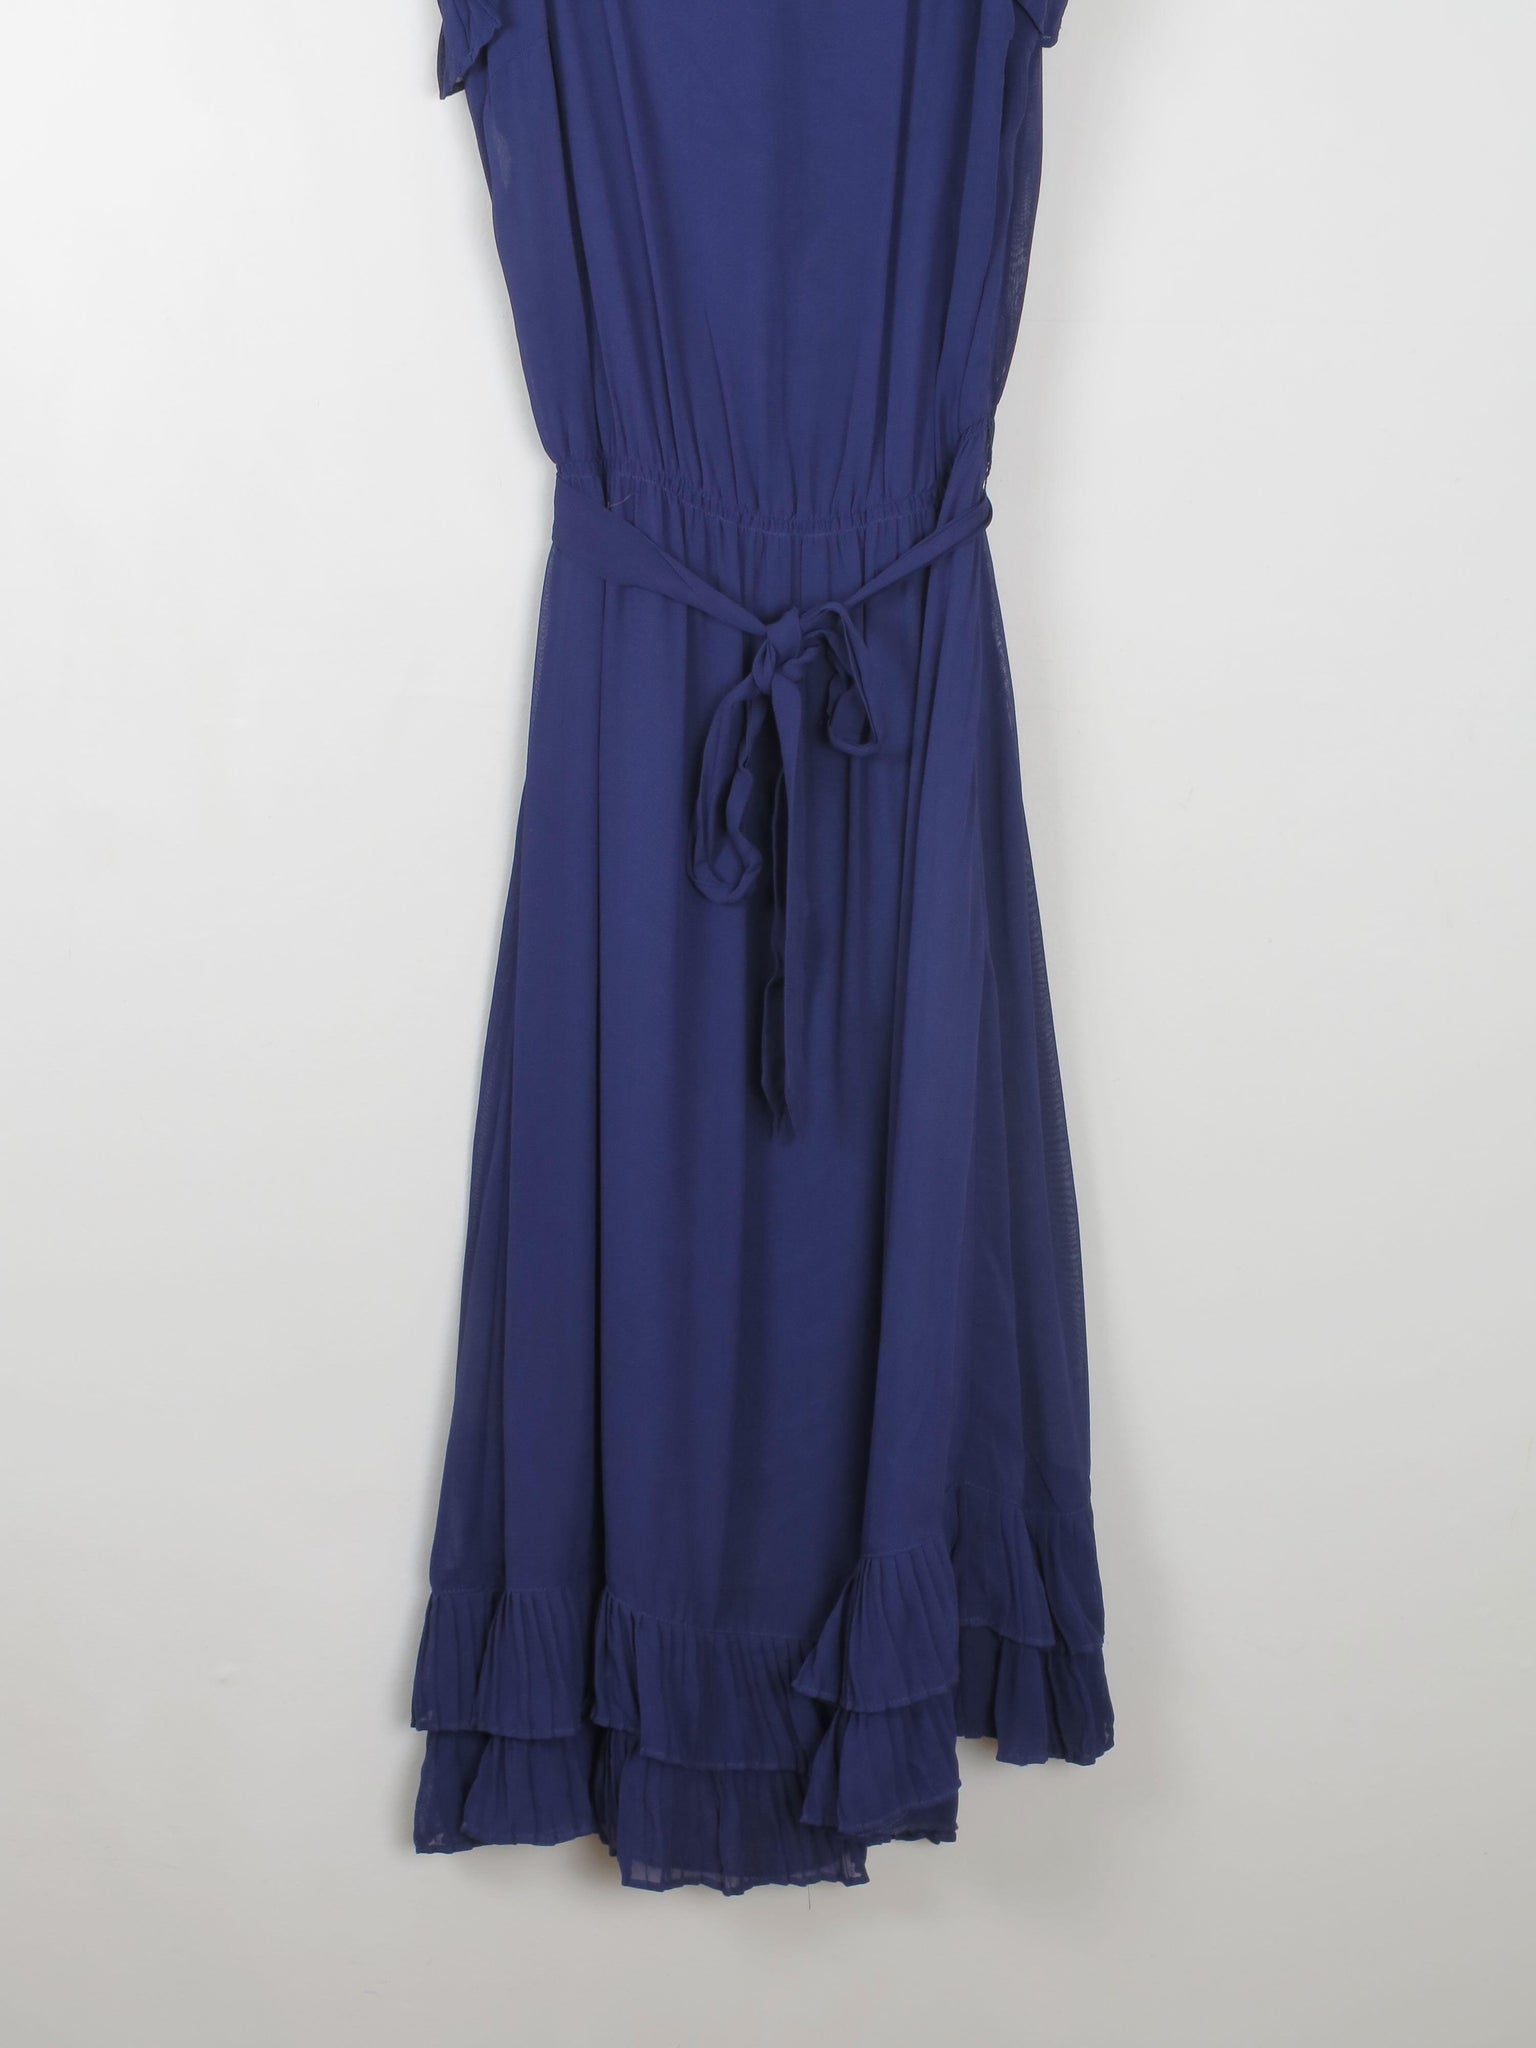 Navy Vintage Style Dress With Spaghetti Straps Designer Remix S - The Harlequin